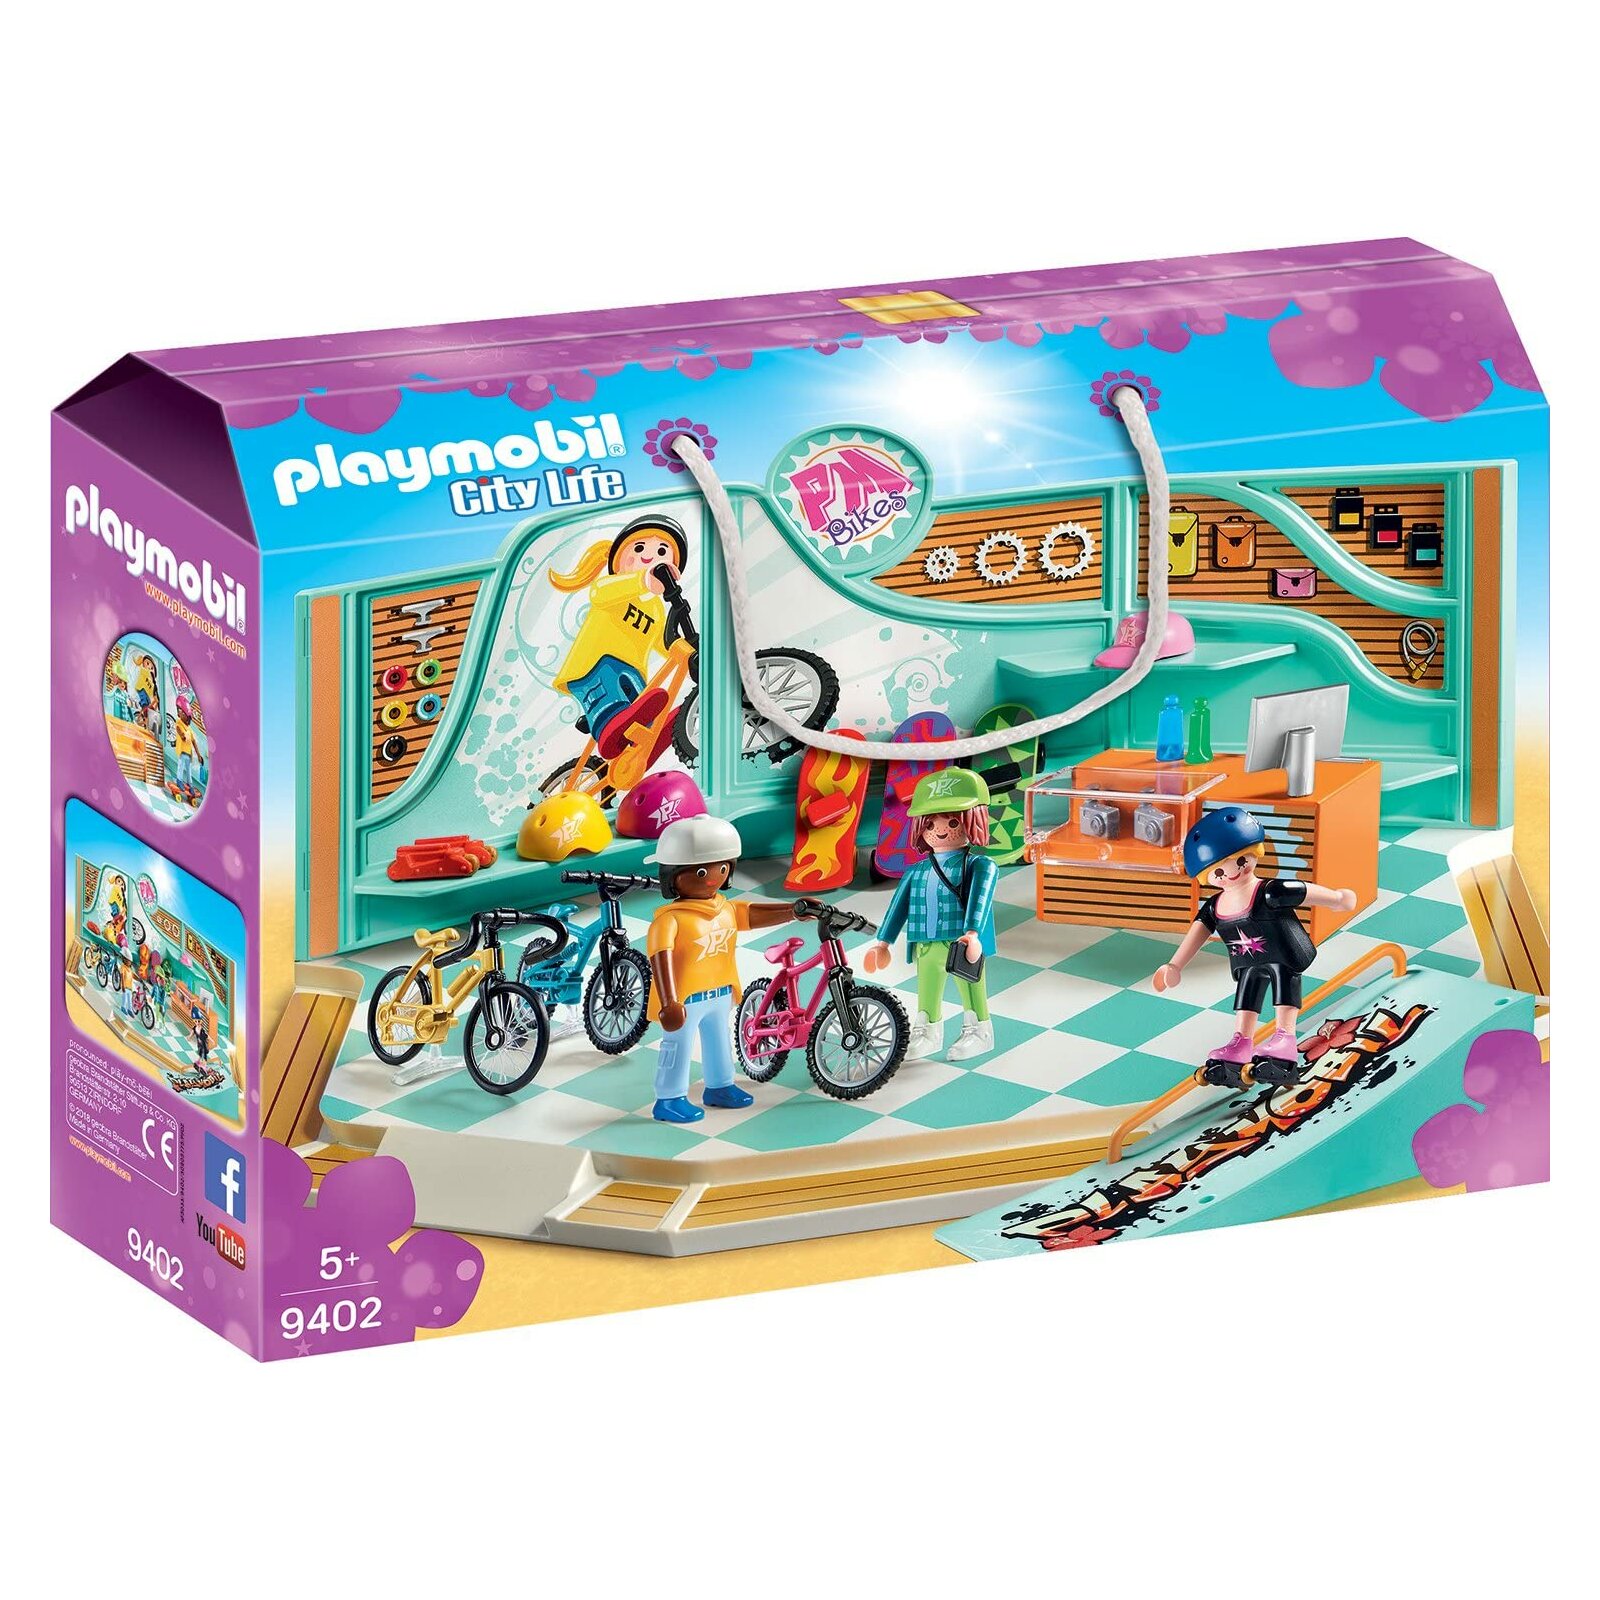 PLAYMOBIL - City Life - 9402 Bike & Skate Shop (A)